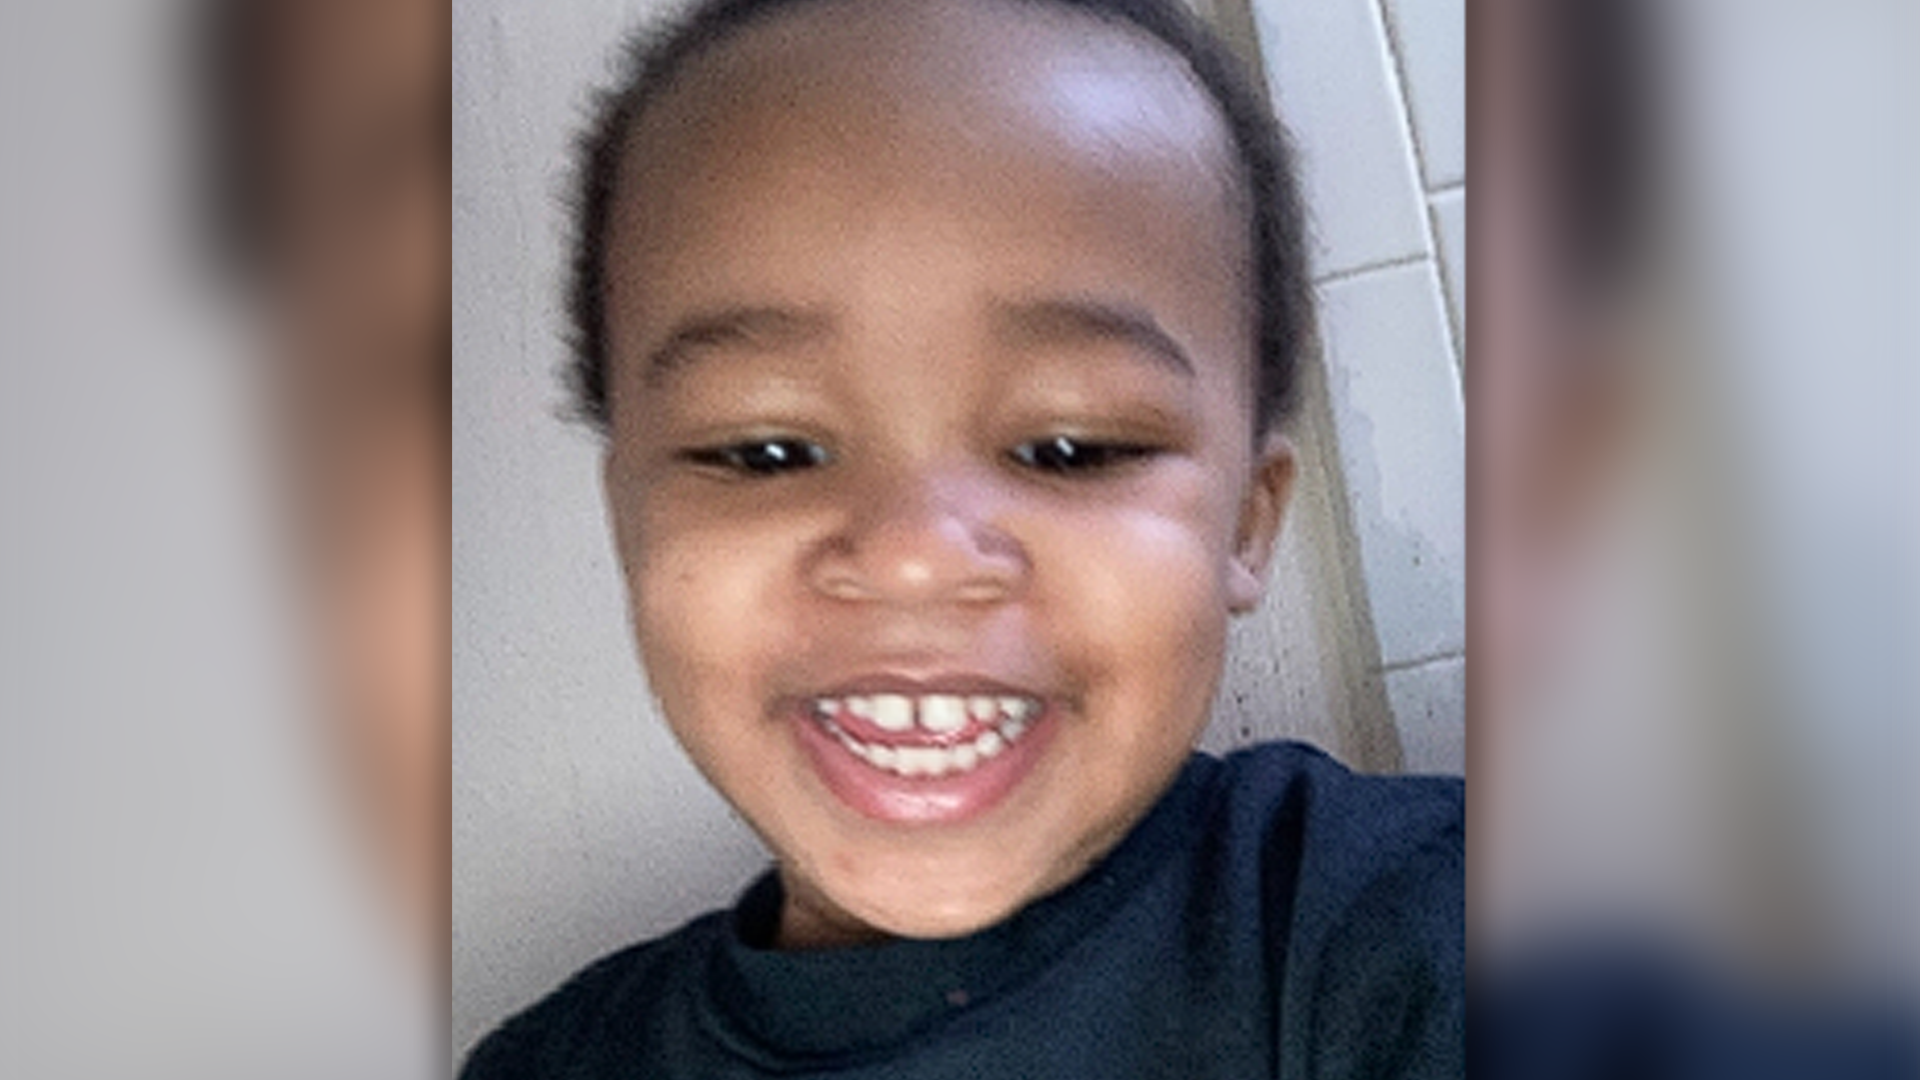 police-missing-2-year-old-bridgeport-boy-found-safe-in-the-bronx